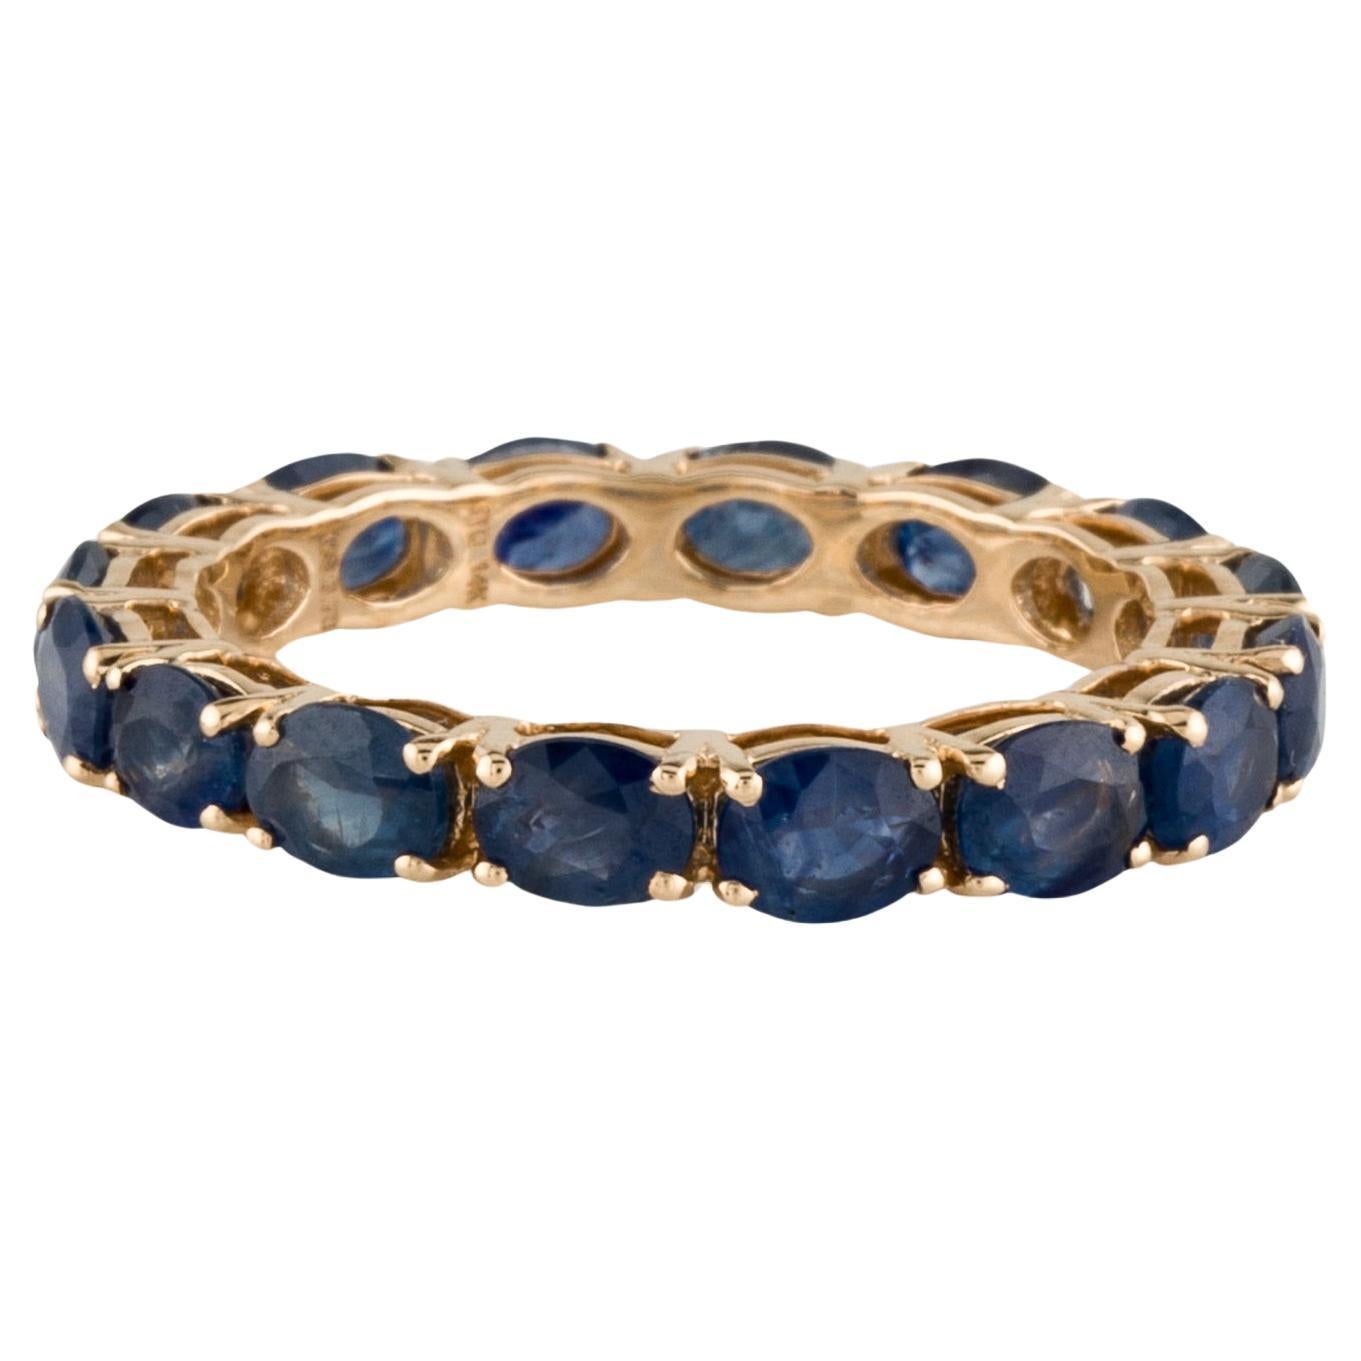 Luxurious 14K Gold 2.54ctw Sapphire Eternity Band - Size 6.75 - Elegant Jewelry